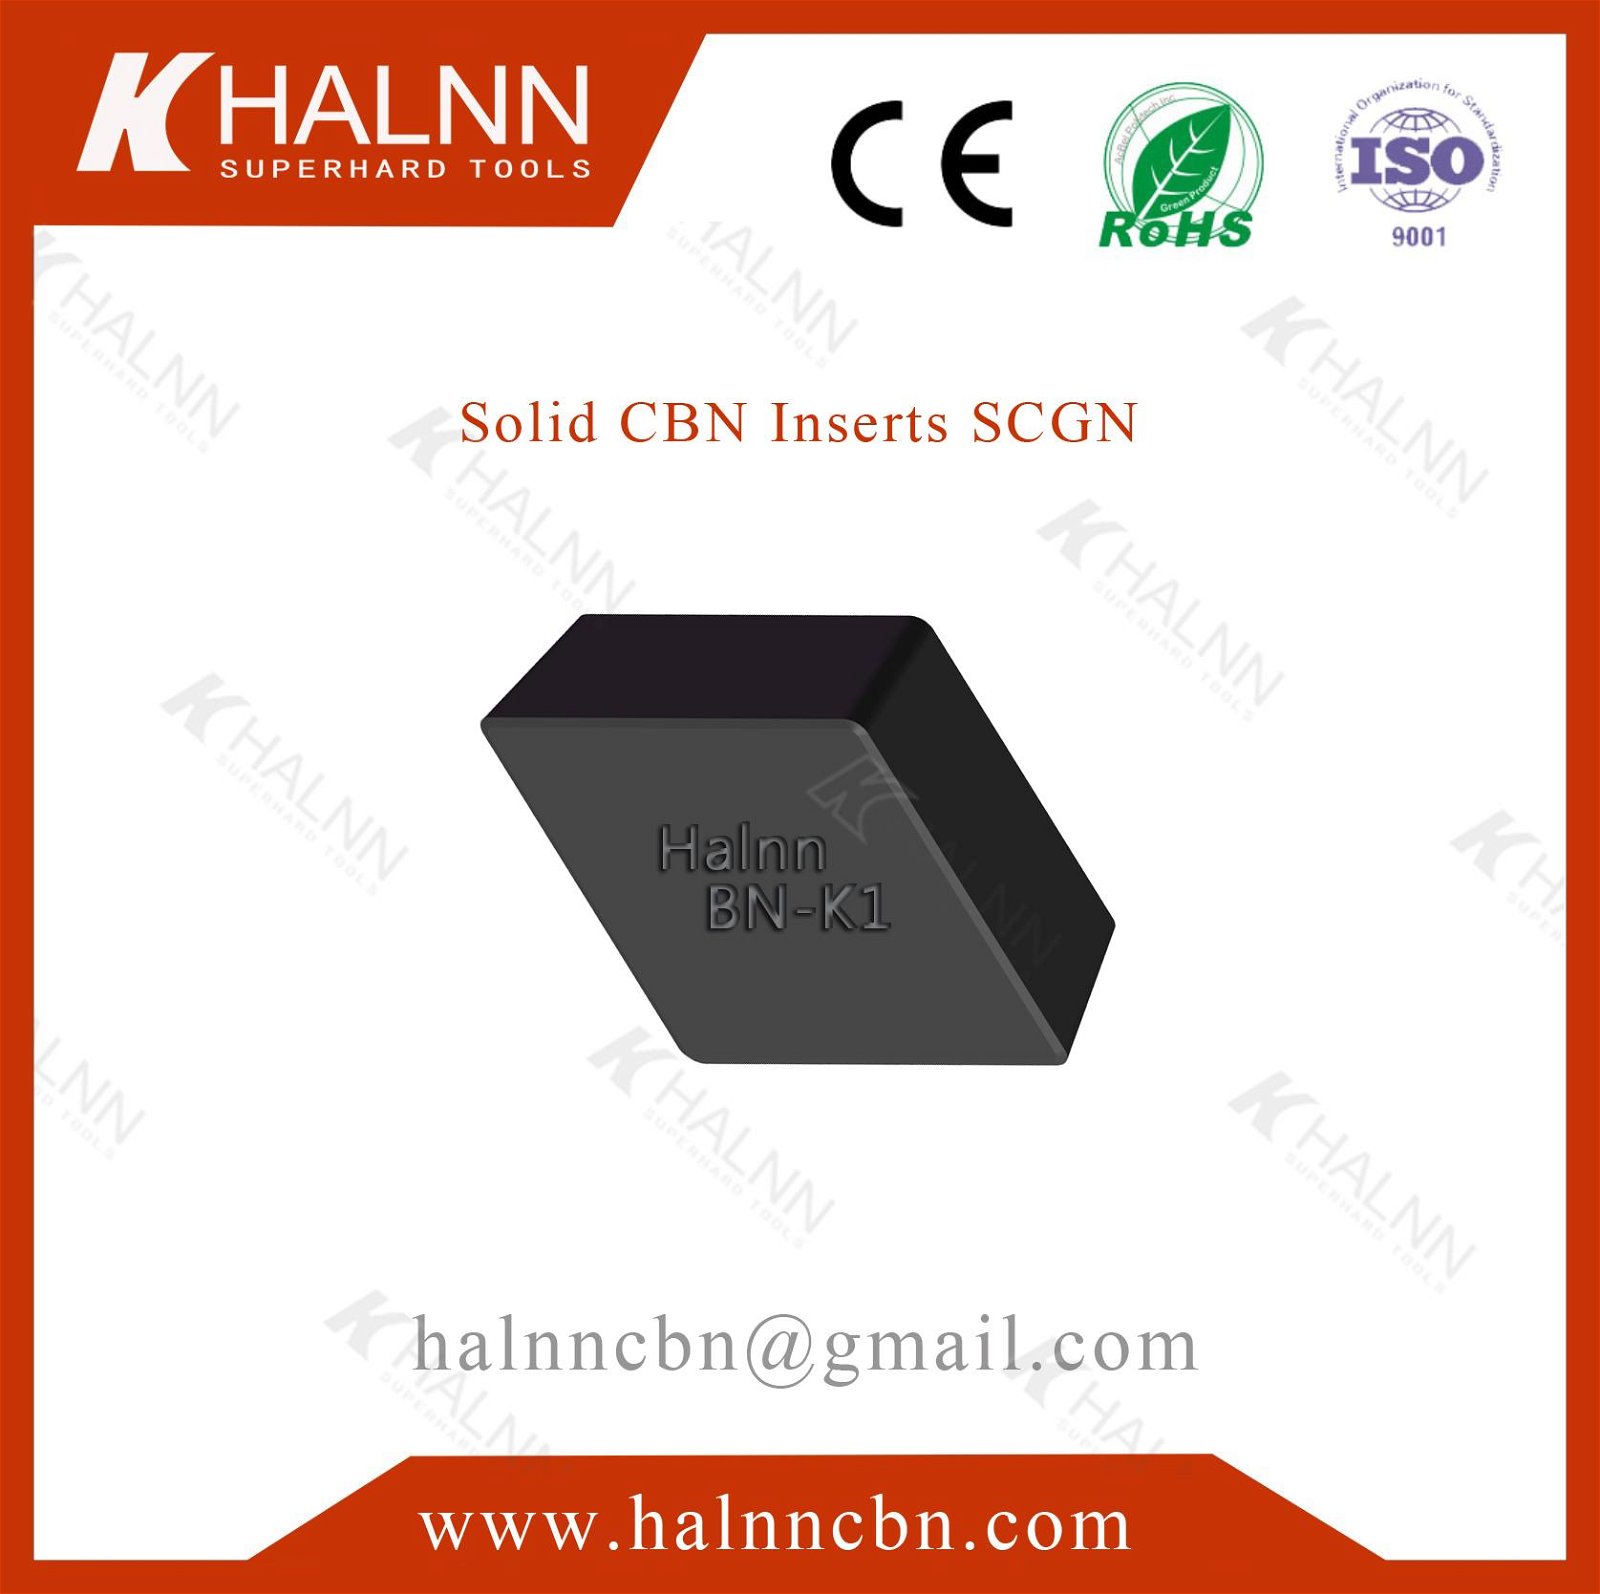 Halnn BN-K1 solid cbn inserts machining pumps with excellent wear resistance